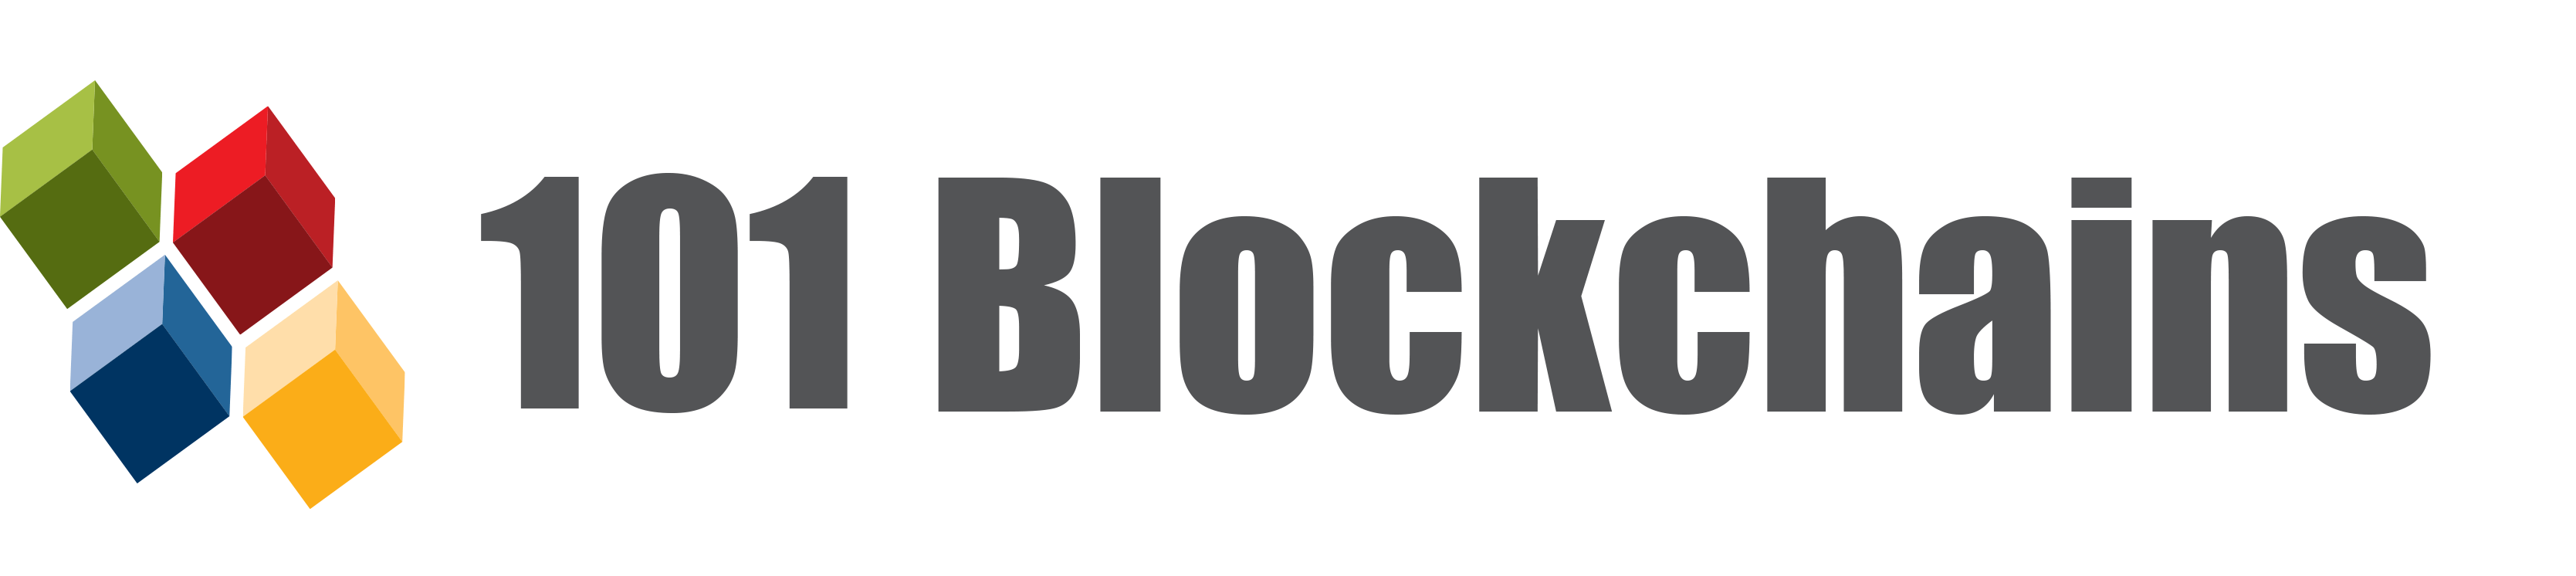 101_Blockchains_white_background